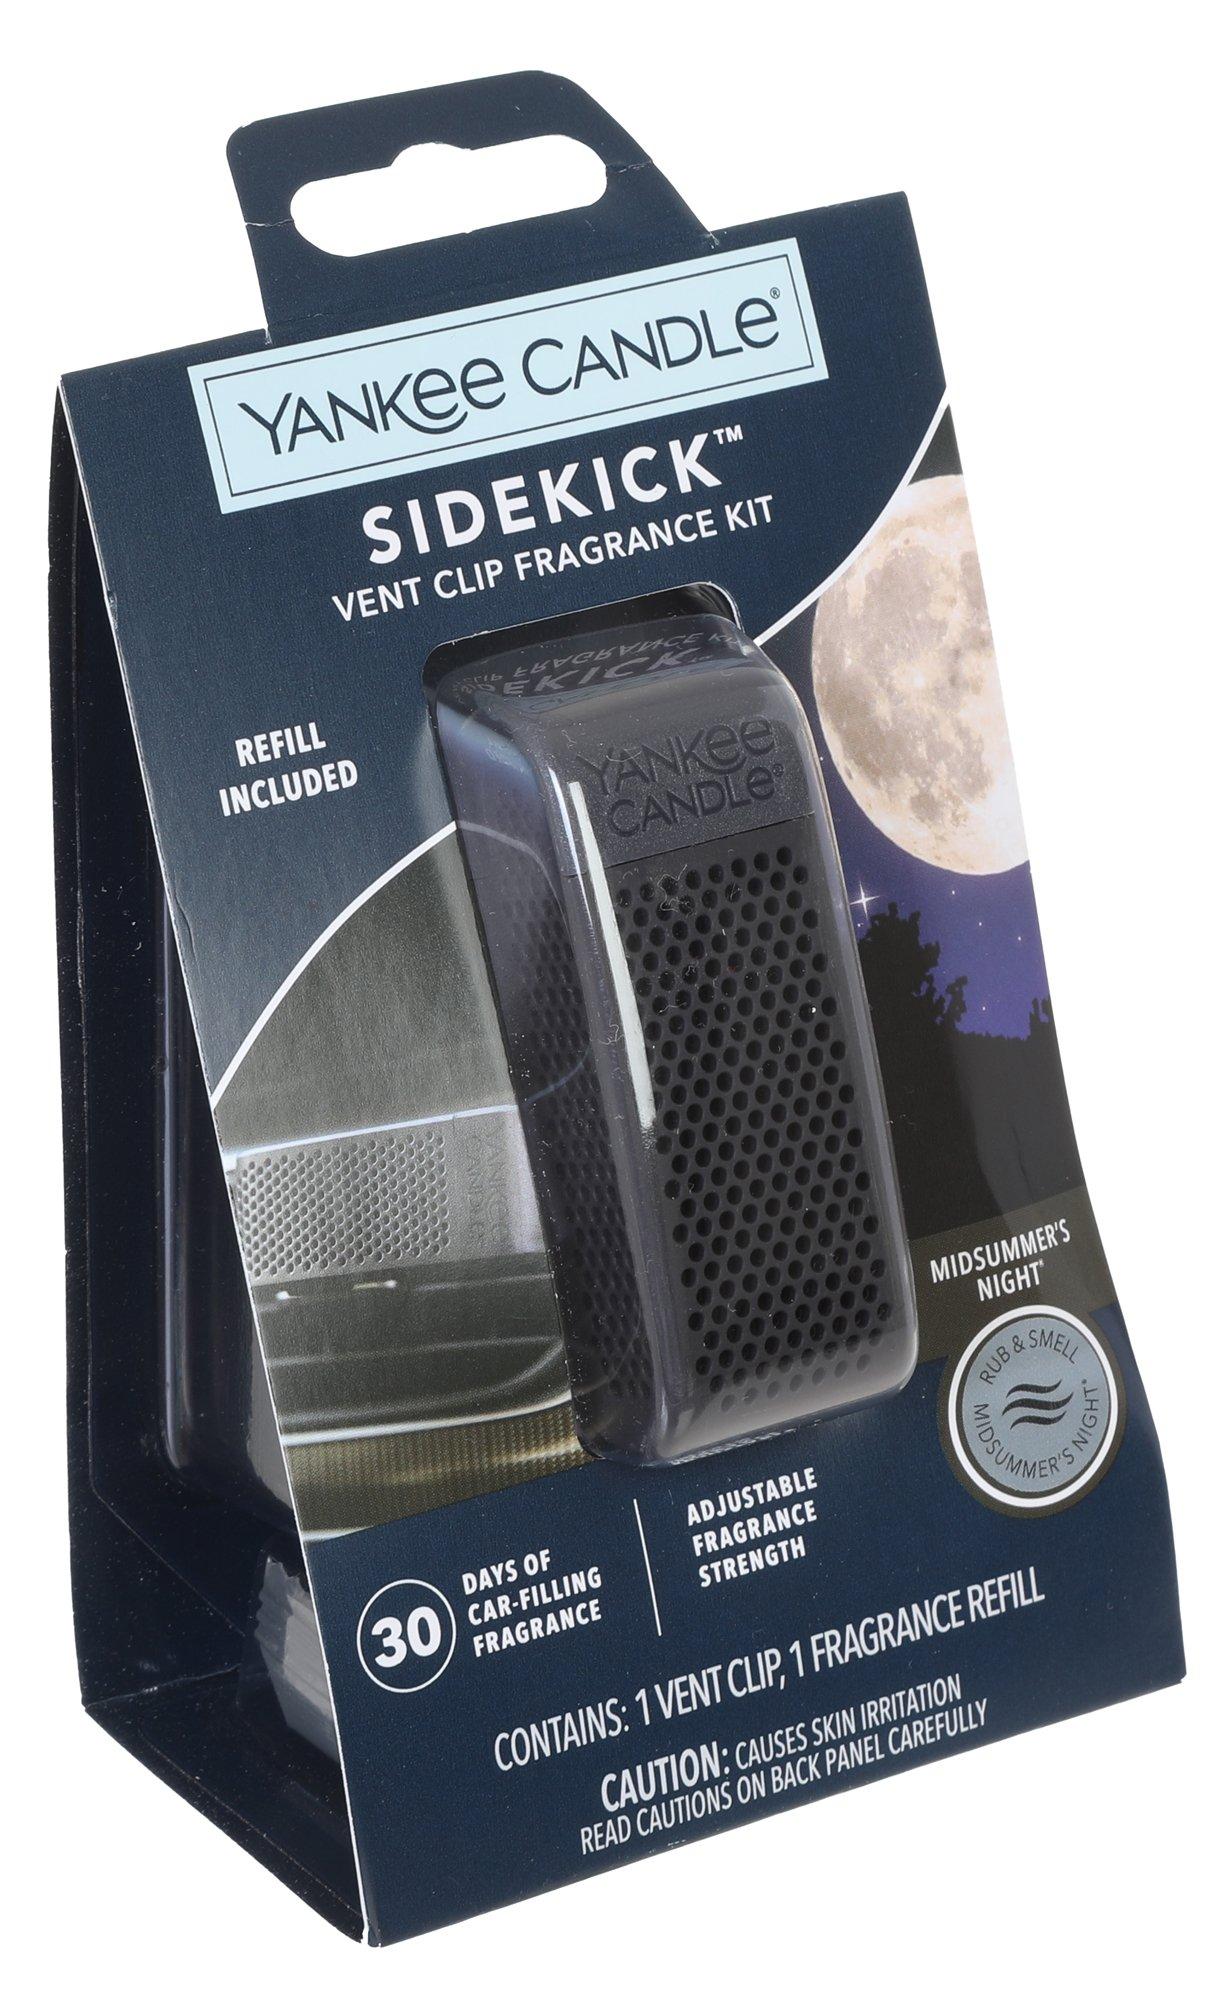 Midsummer's Night Sidekick Vent Clip Fragrance Kit